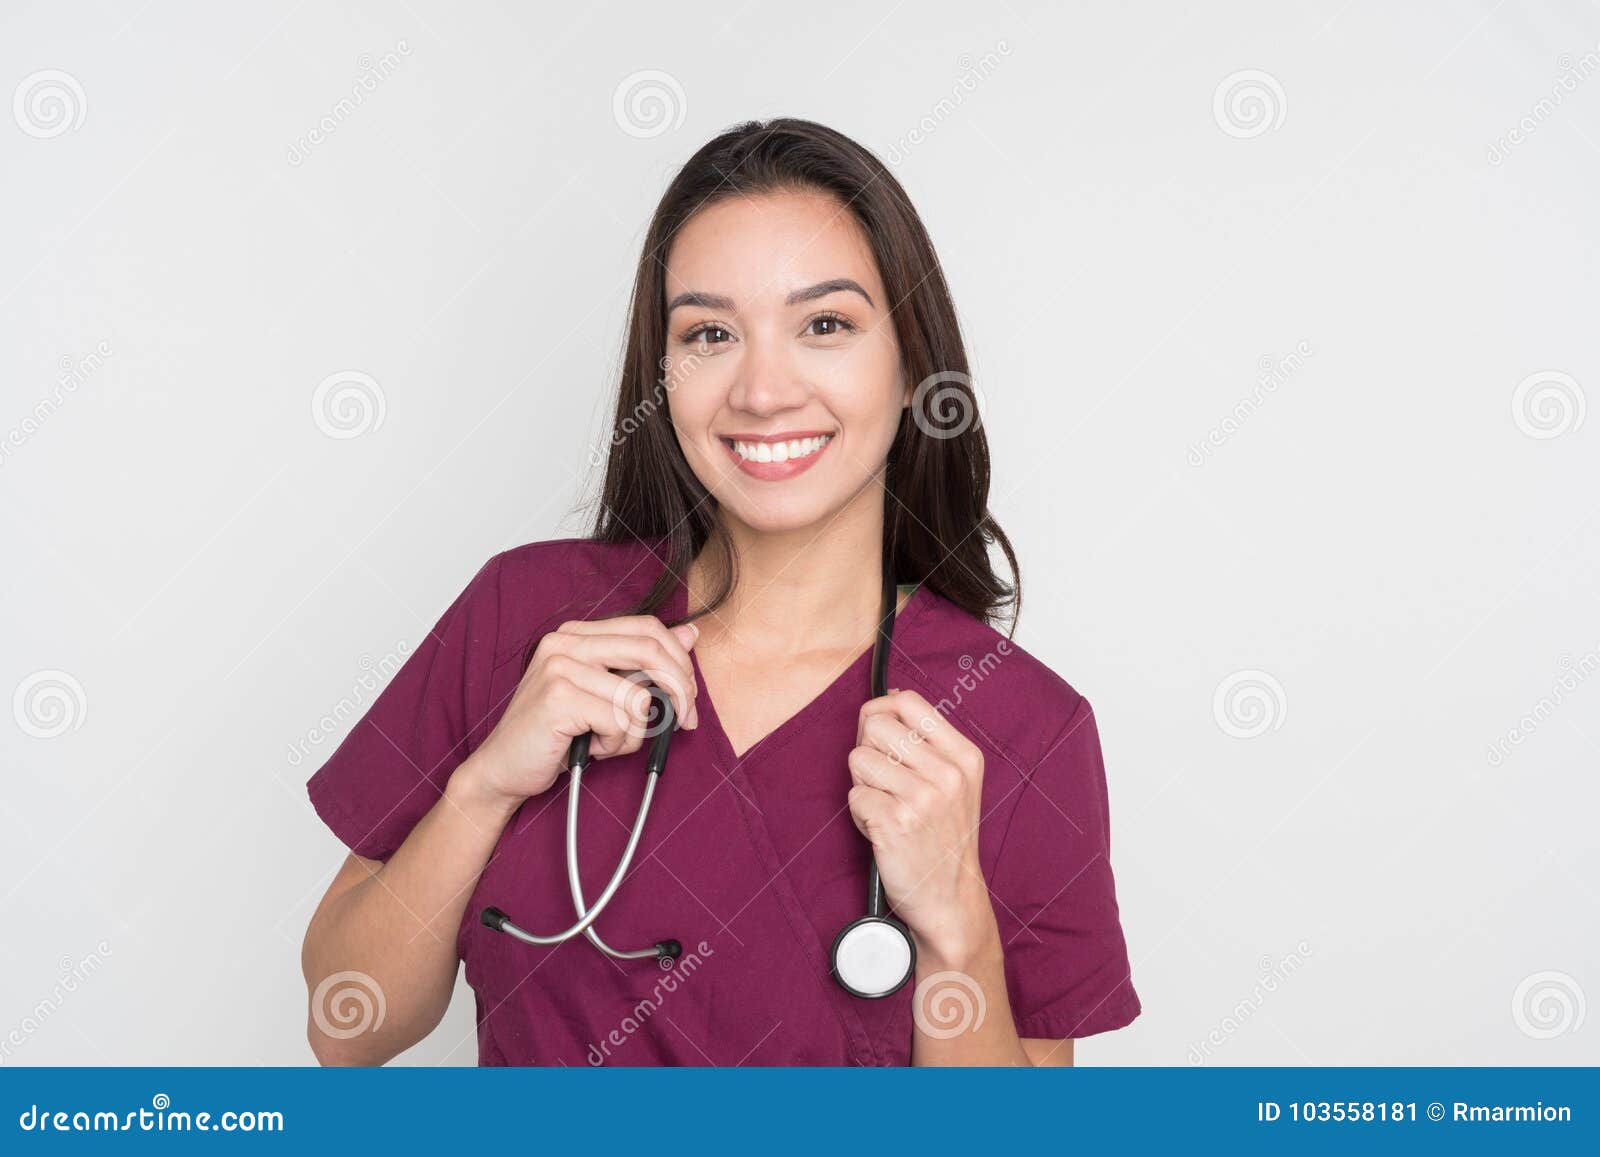 nurse in scrubs